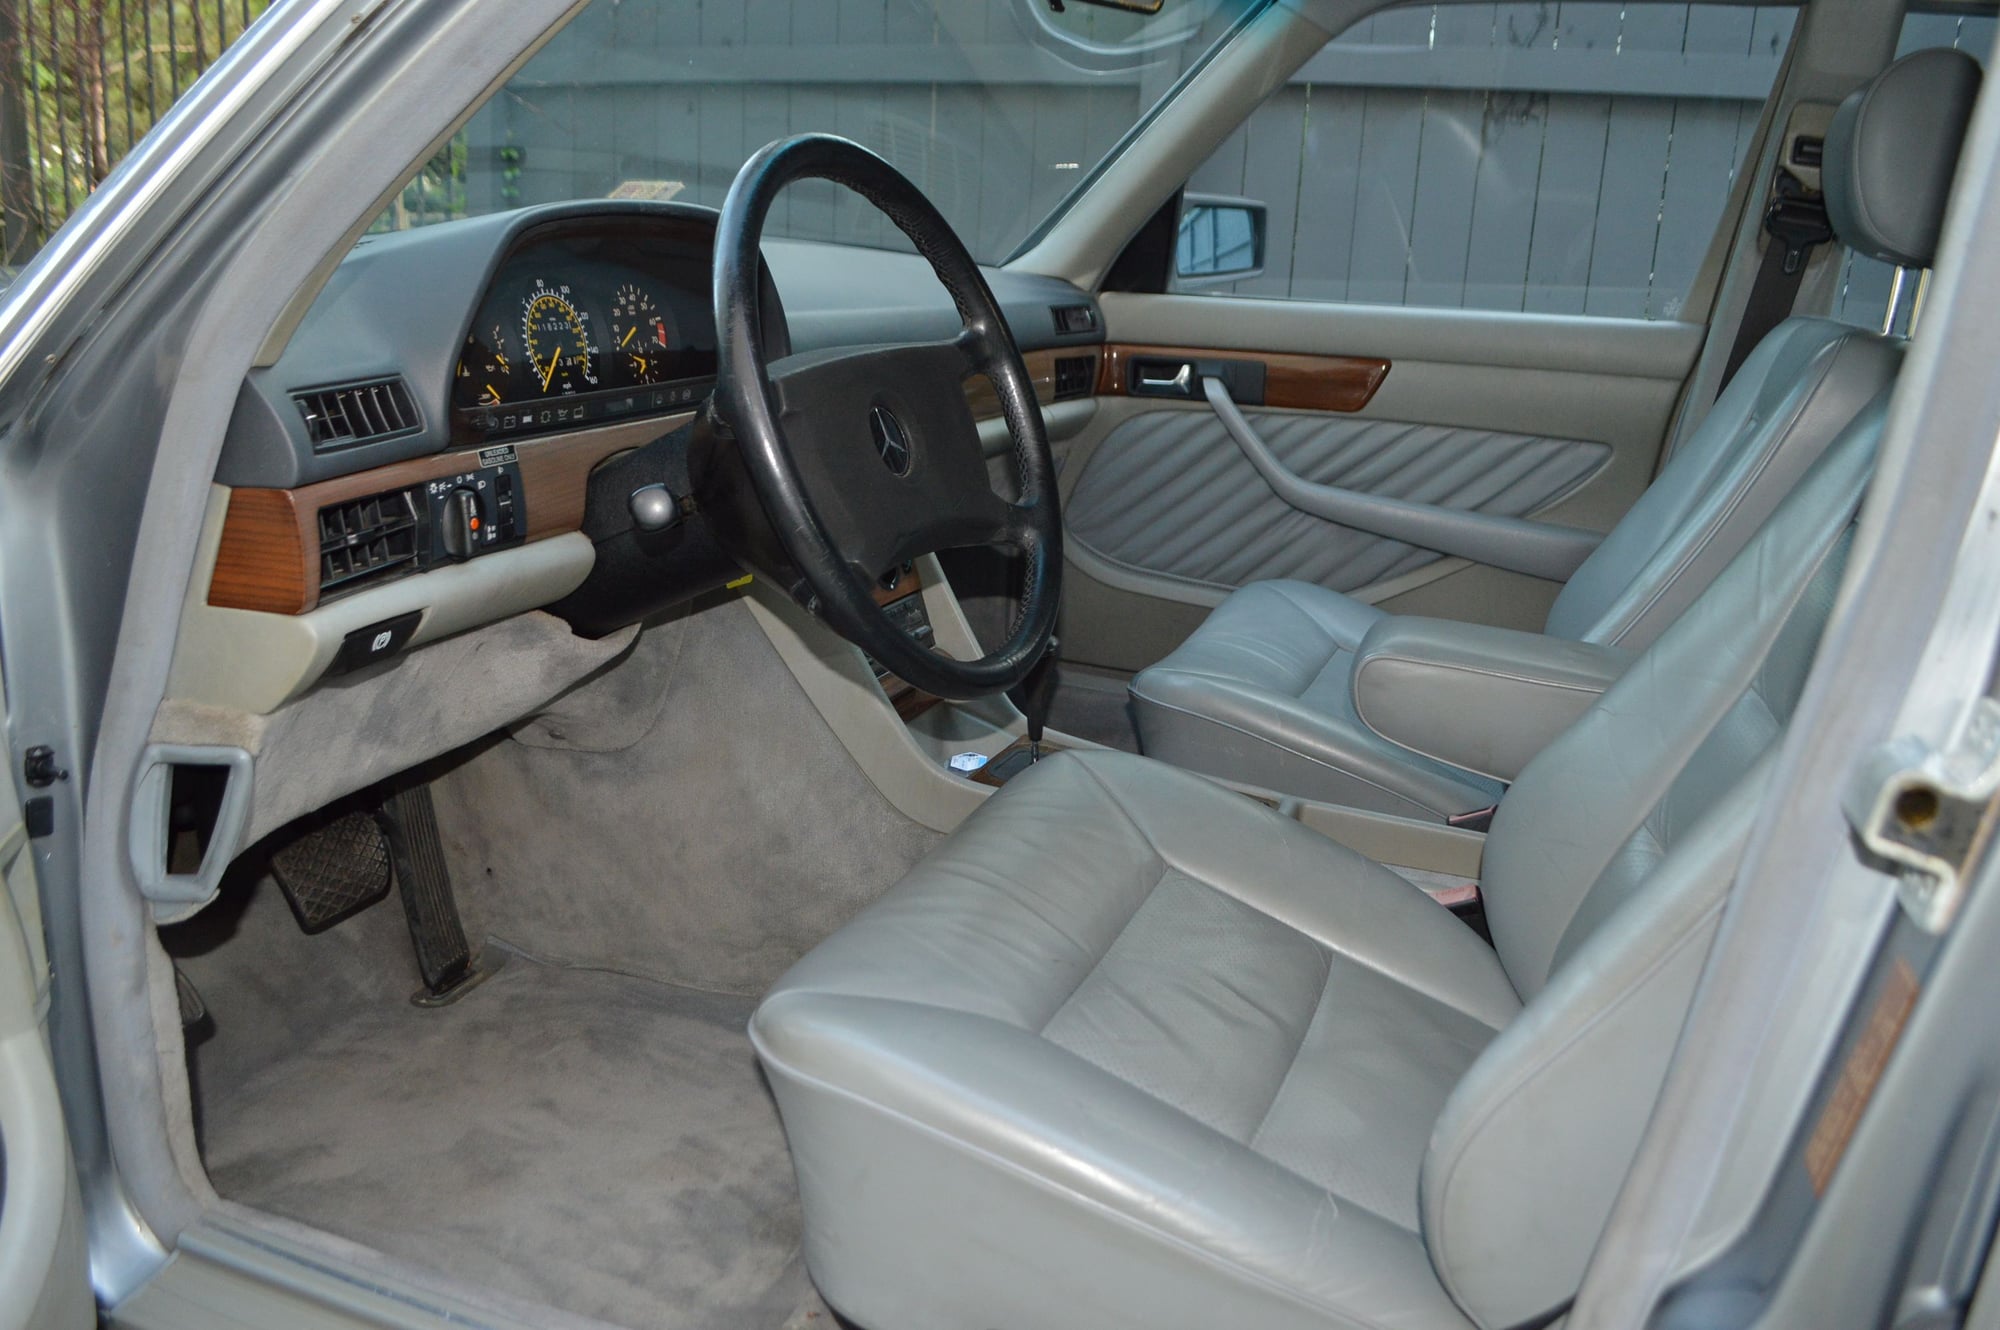 1989 Mercedes-Benz 300SE - 1989 260SE on BringaTrailer.com - Used - VIN WDB1260201A515767 - 116,500 Miles - 6 cyl - 2WD - Automatic - Sedan - Gray - Houston, TX 77005, United States